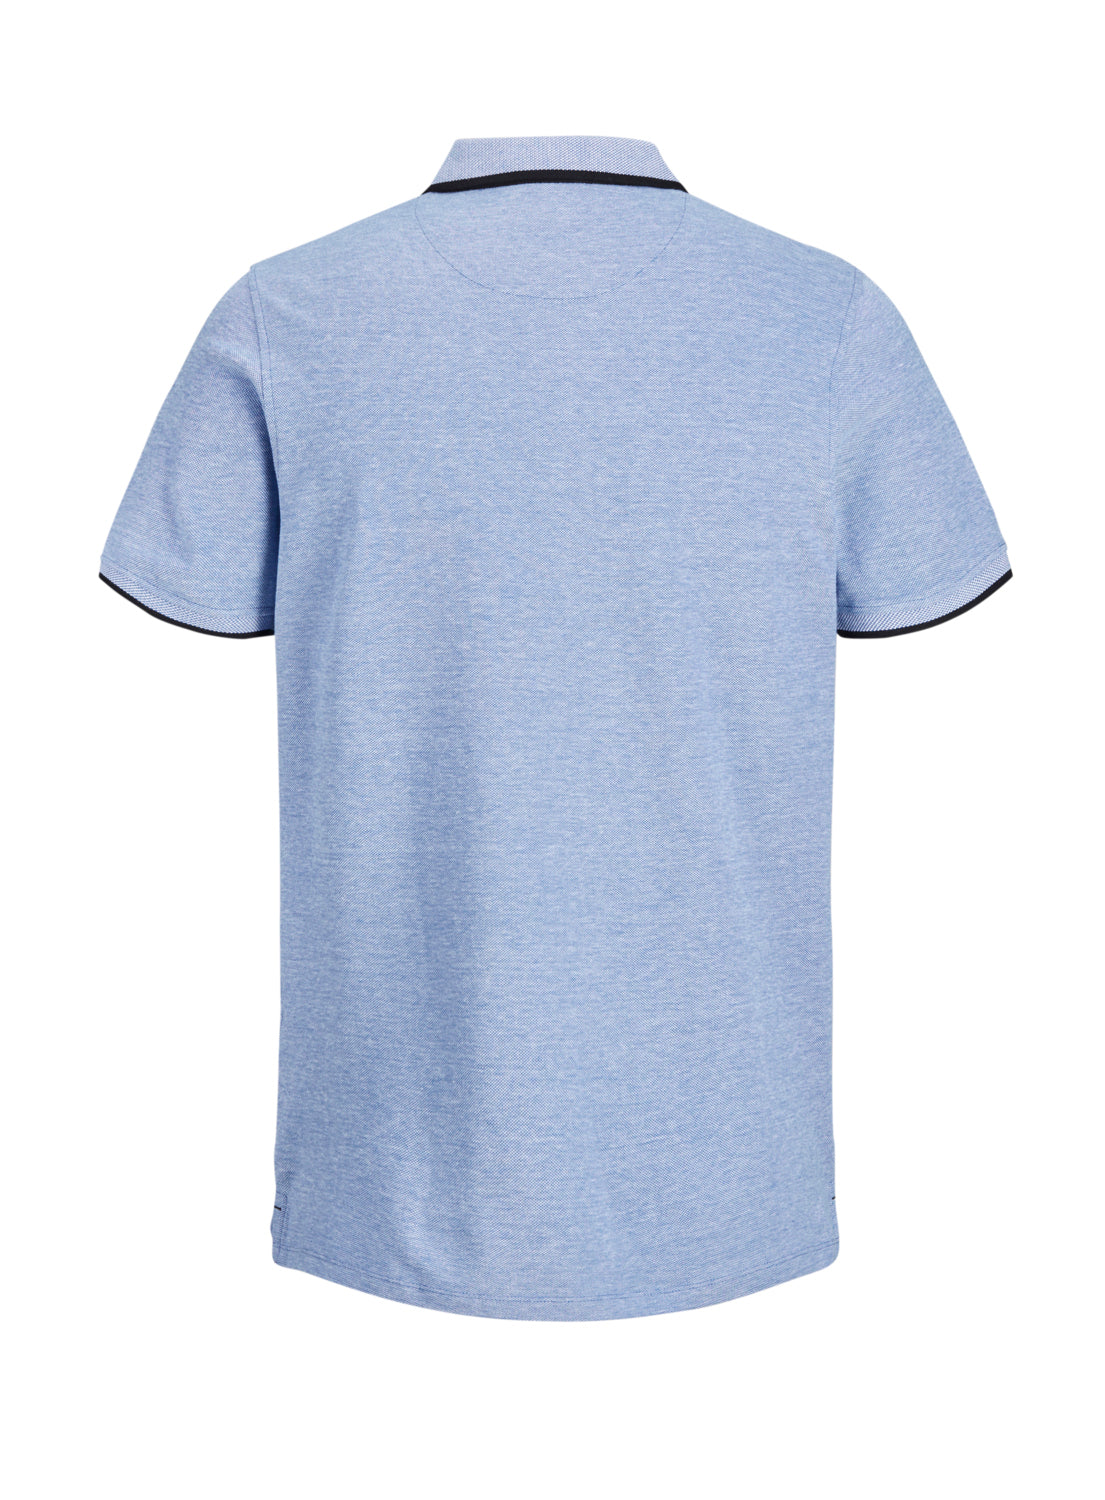 JJEPAULOS Polo Shirt - bright cobalt